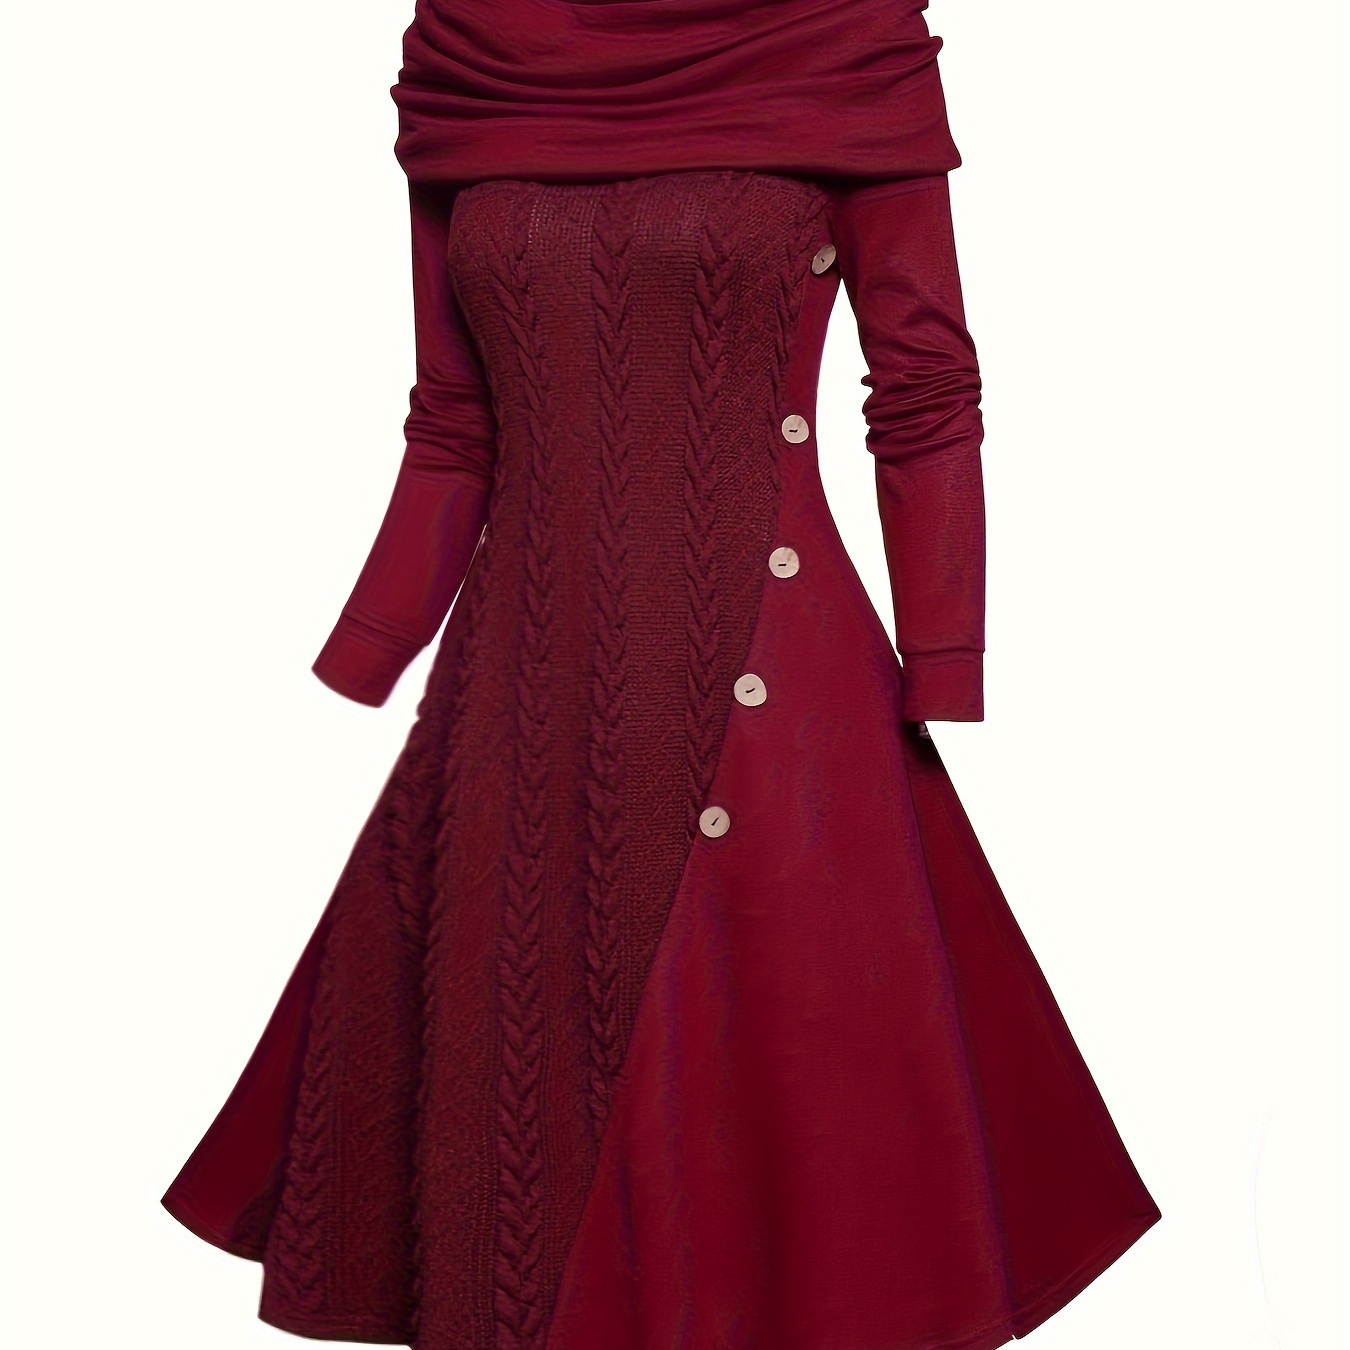 

Foldover Cowl Neck Dress, Elegant Textured Long Sleeve Solid Dress, Women's Clothing